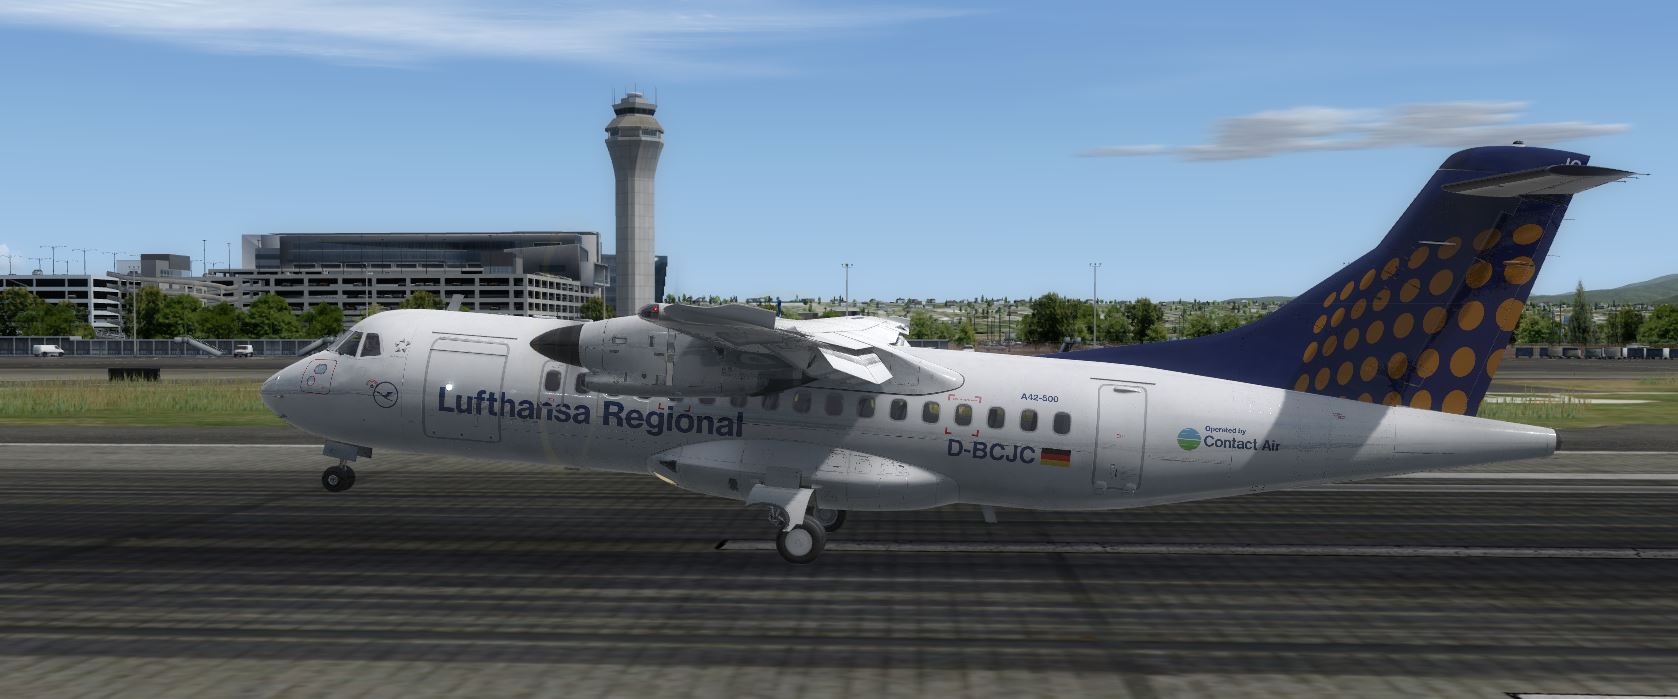 ATR42-500 Lufthansa-7499 